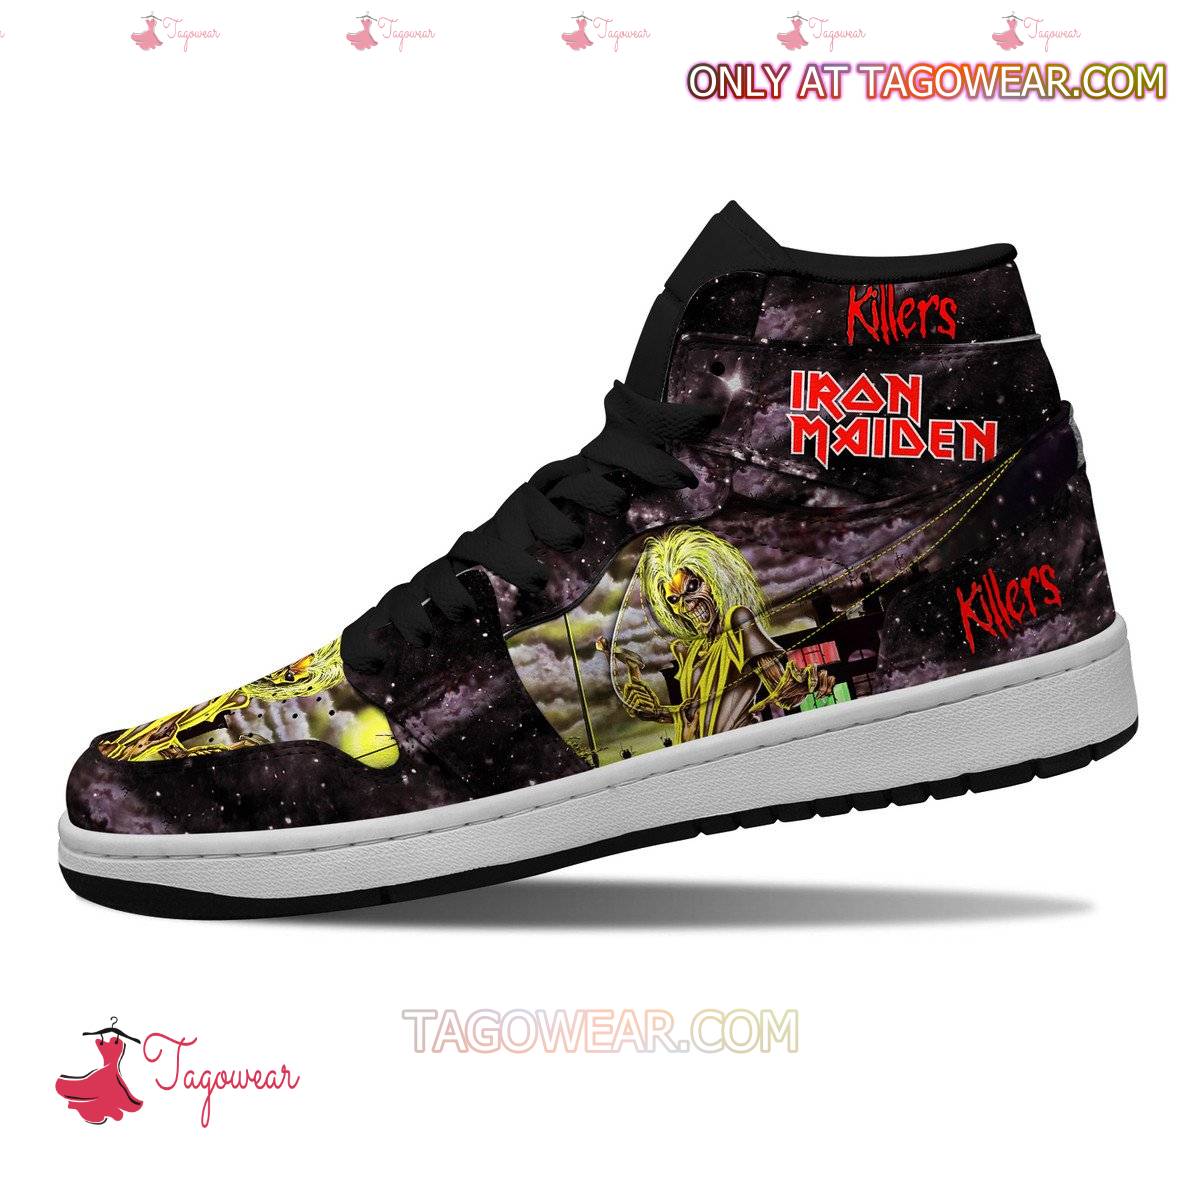 Iron Maiden Killers Air Jordan High Top Shoes b